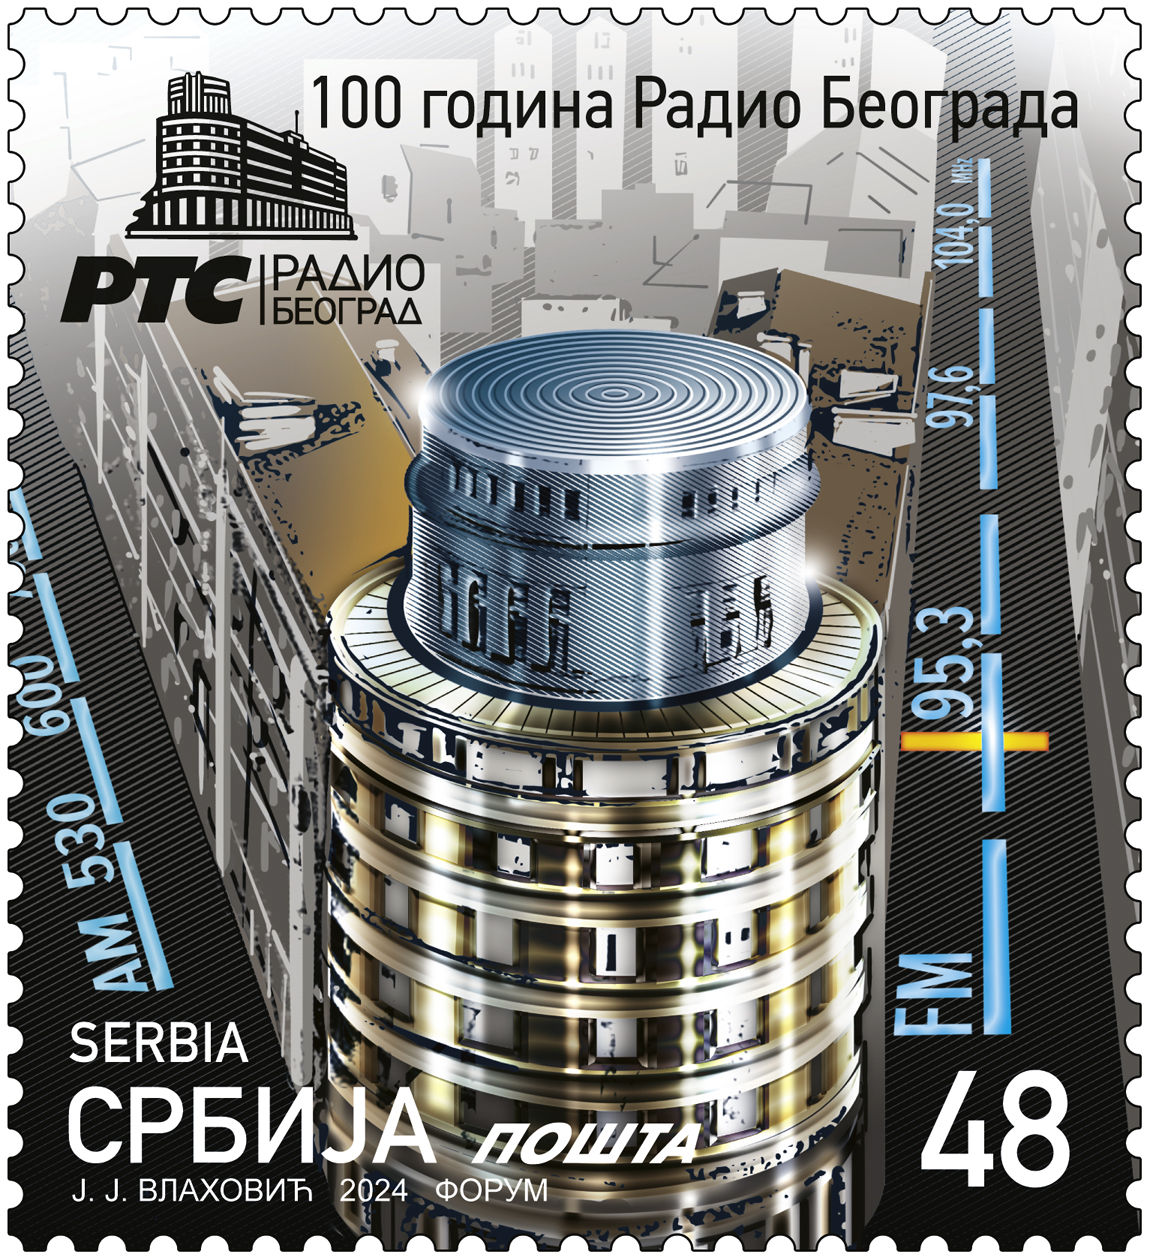 Poštanska marka u čast stogodišnjice Radio Beograda (FOTO) 2